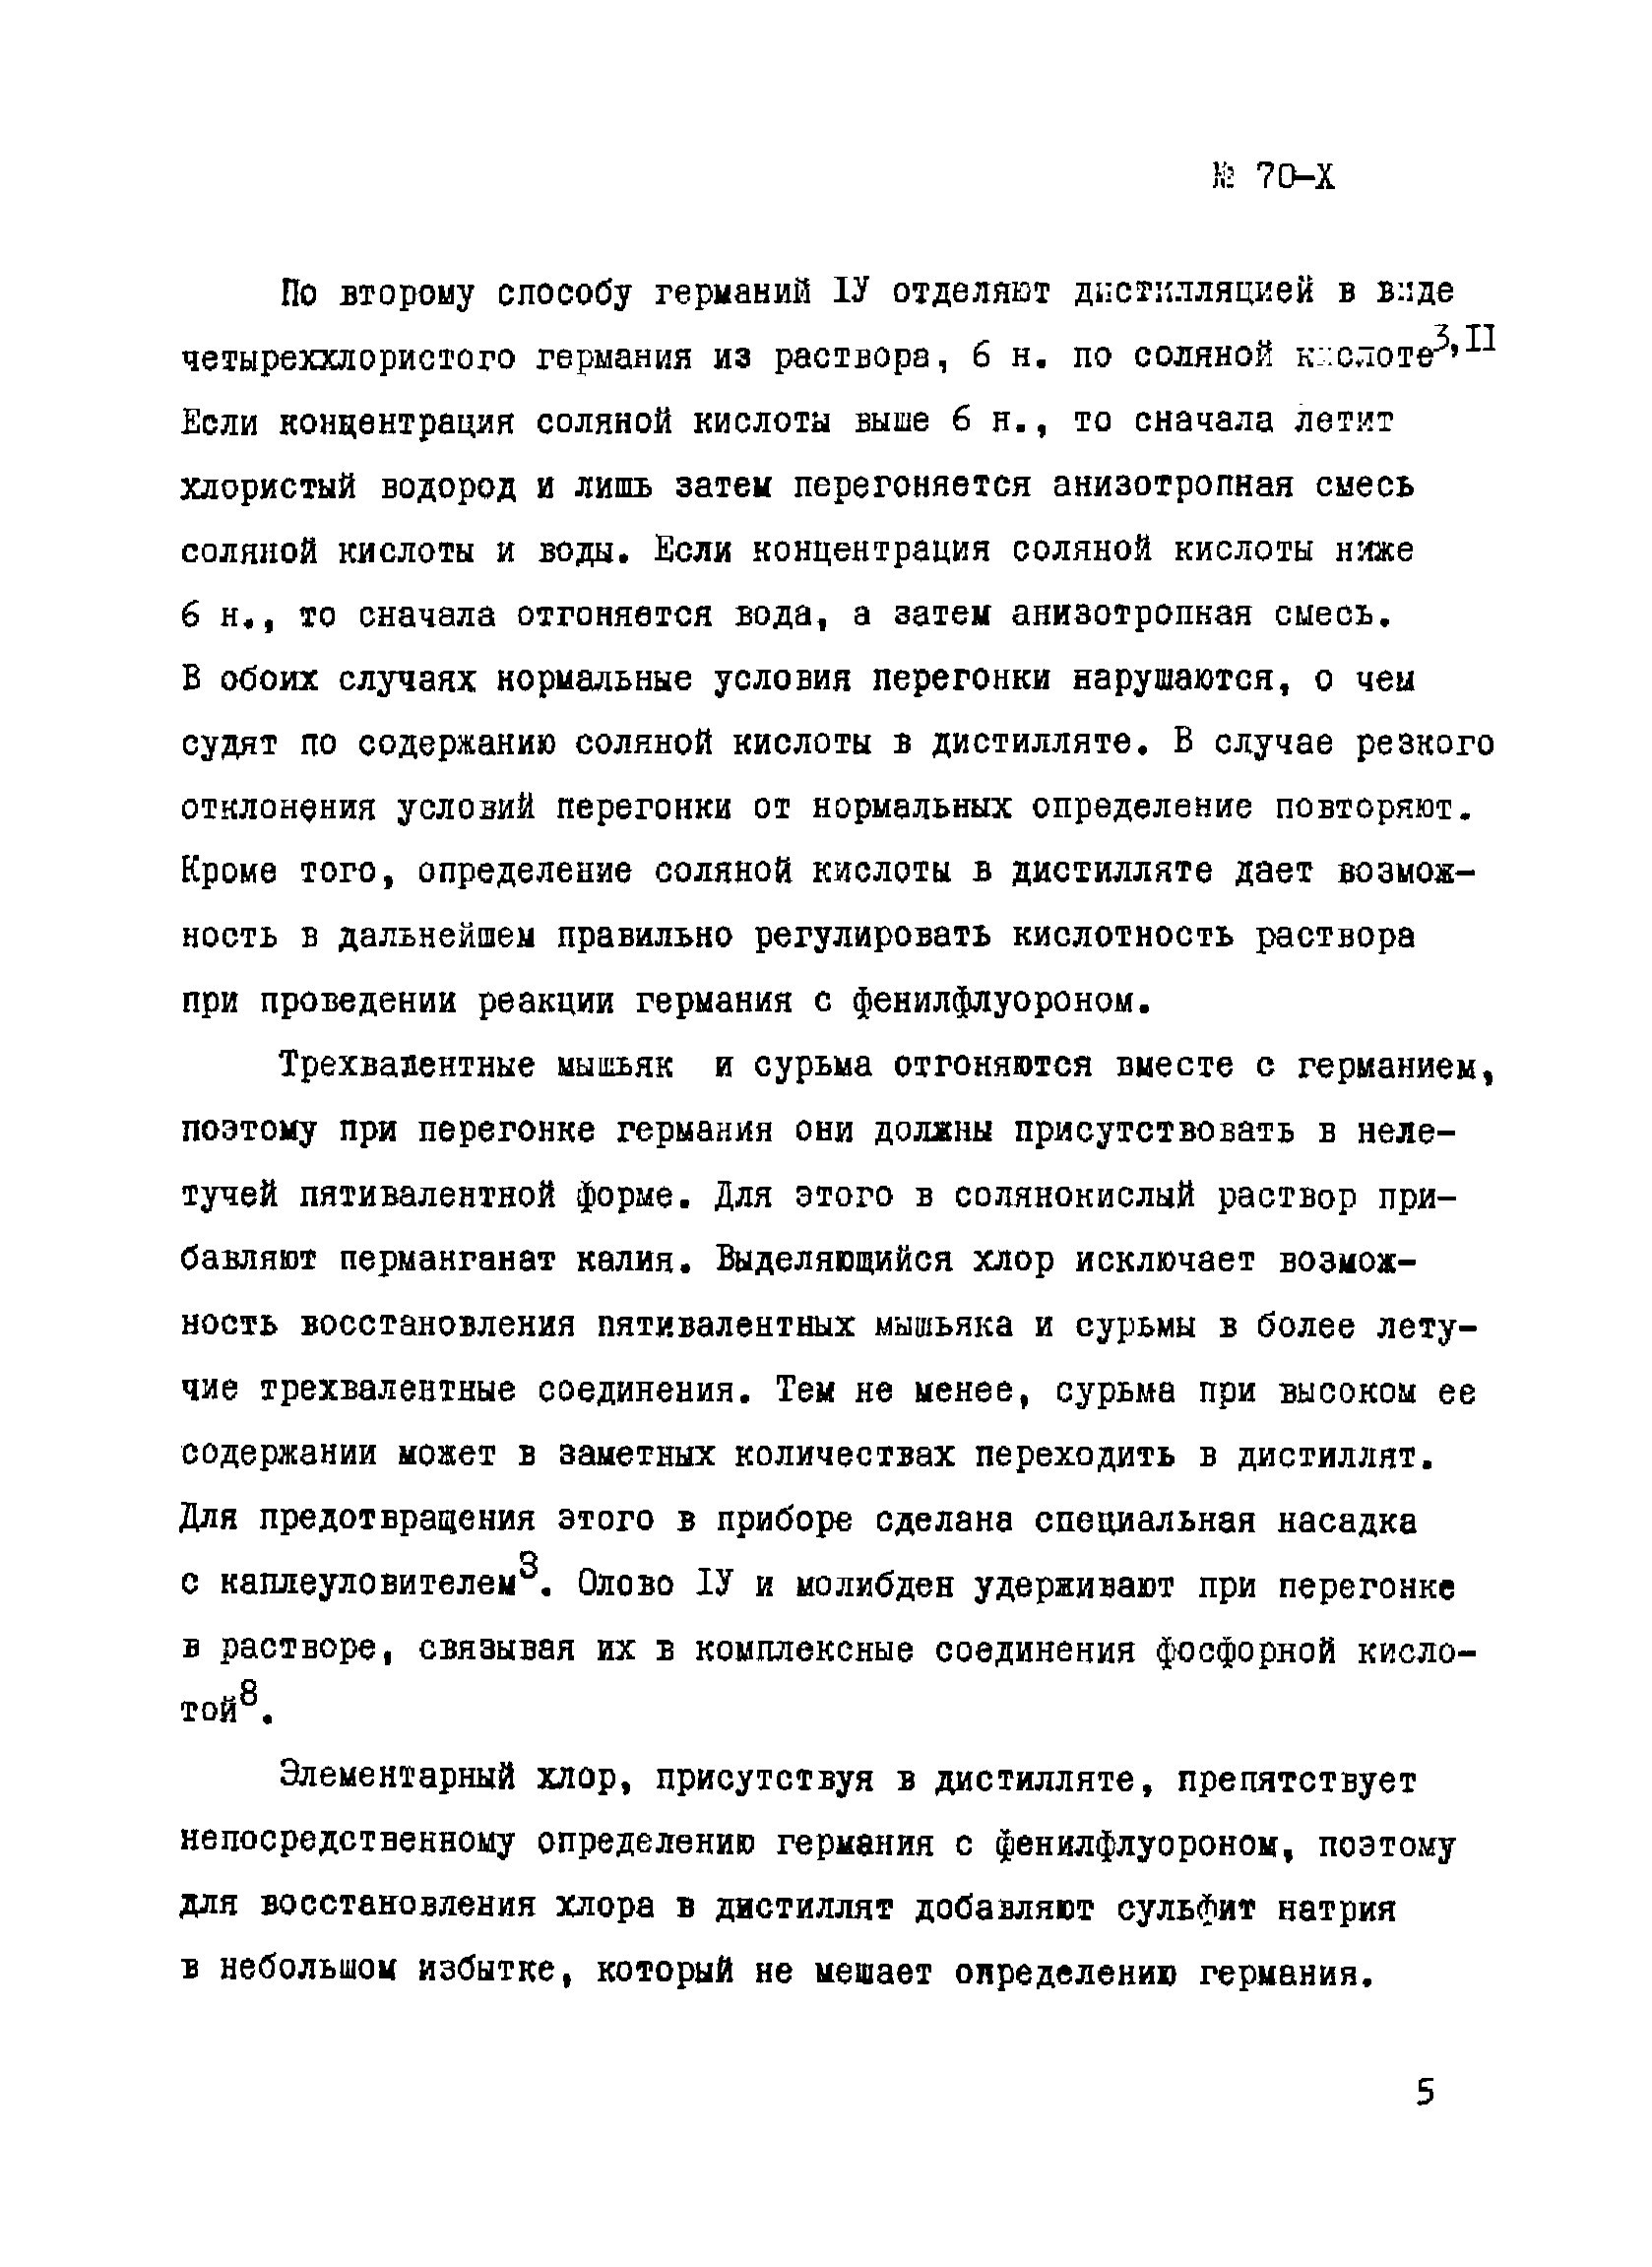 Инструкция НСАМ 70-Х